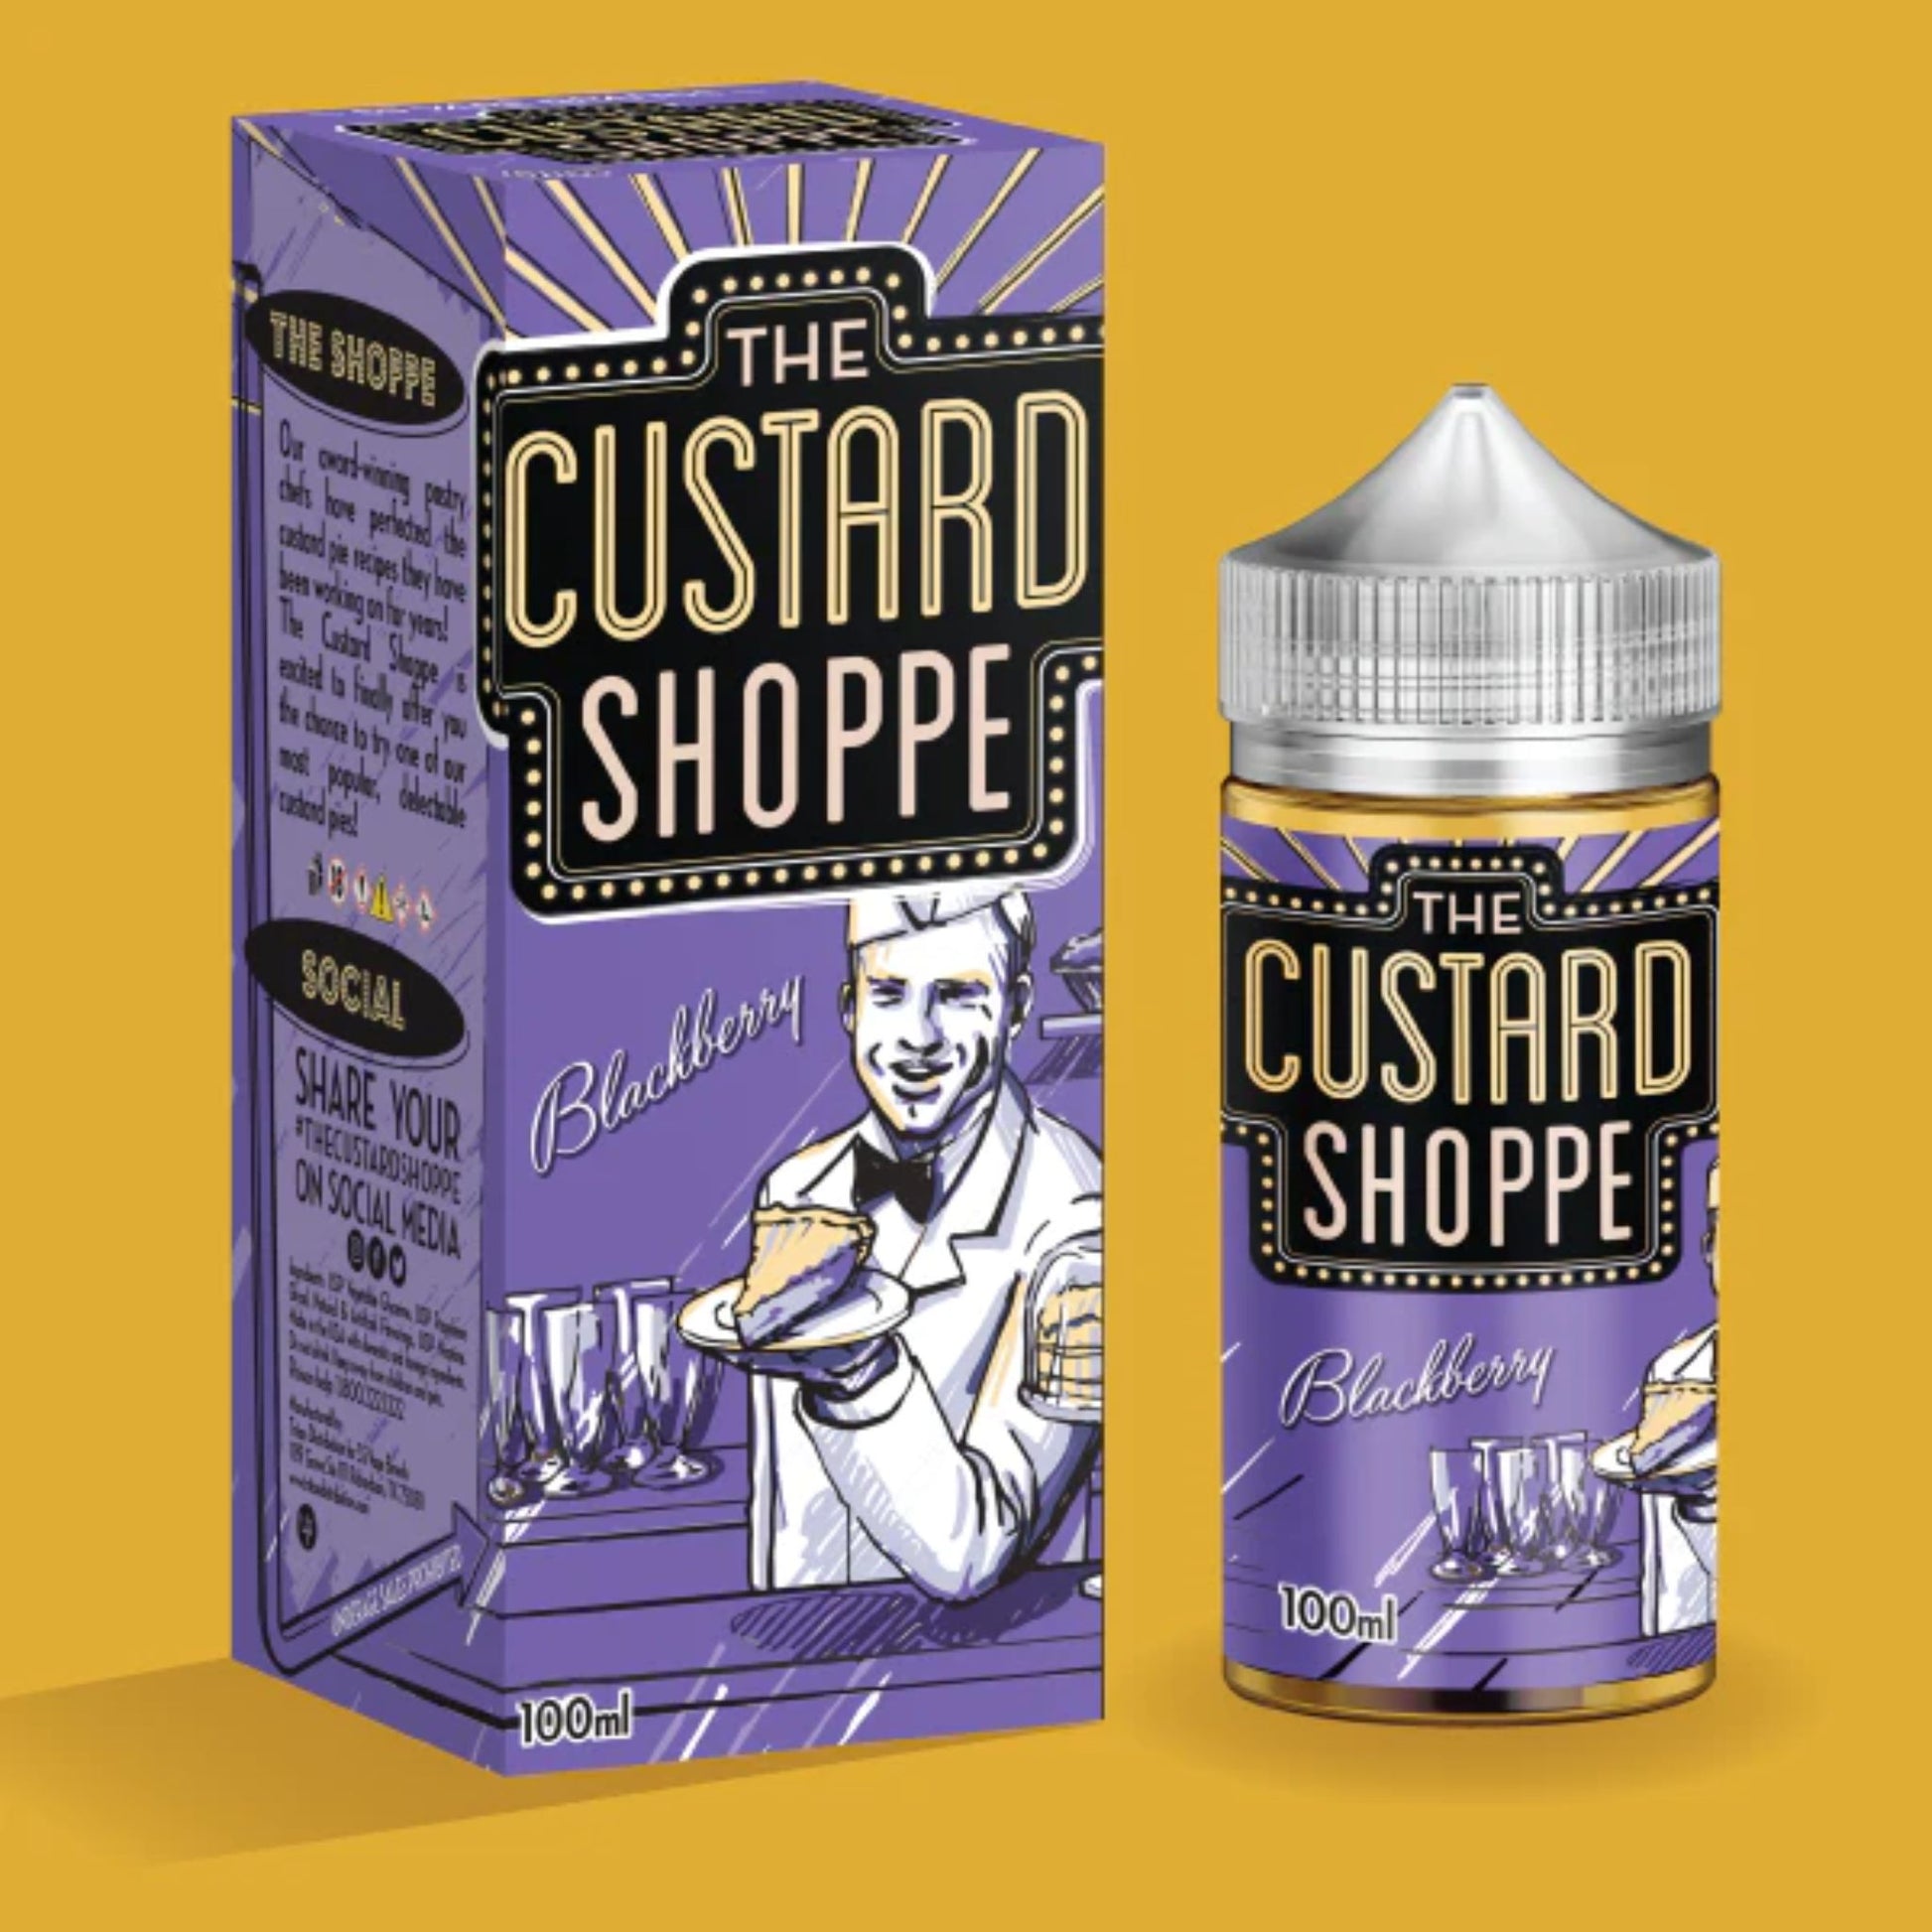 The Custard Shoppe | Blackberry | 100ml bottle and box